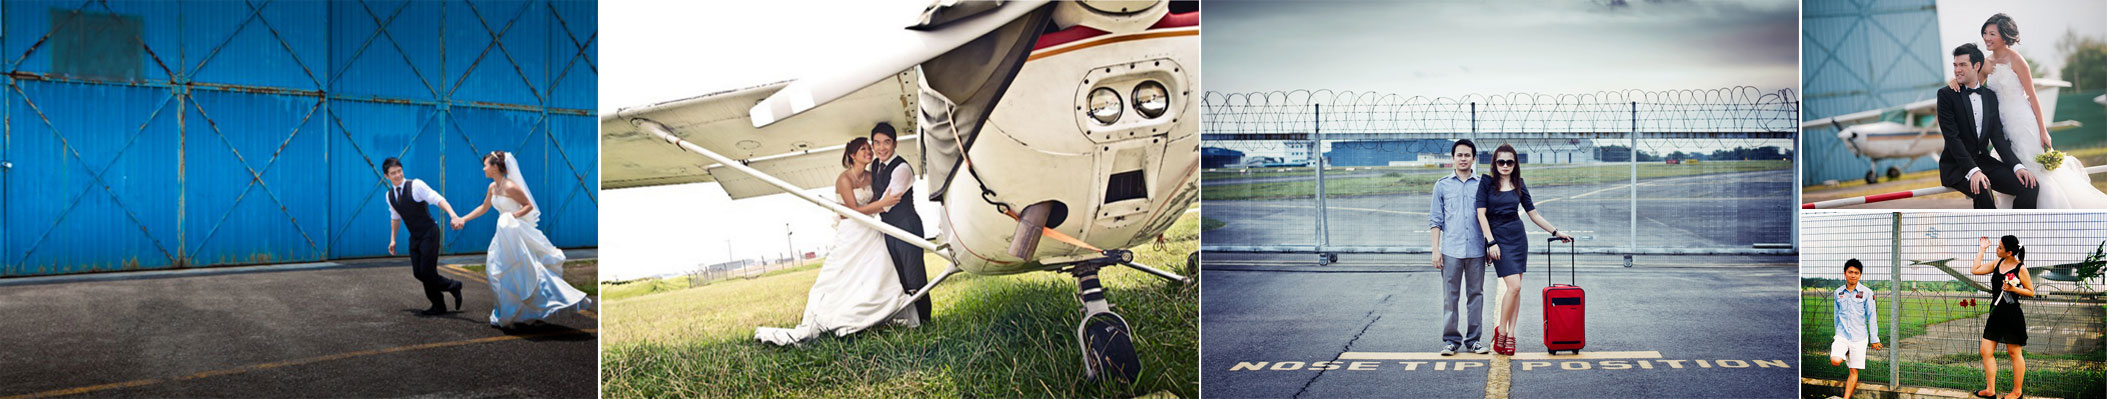 Seletar-Airbase-wedding